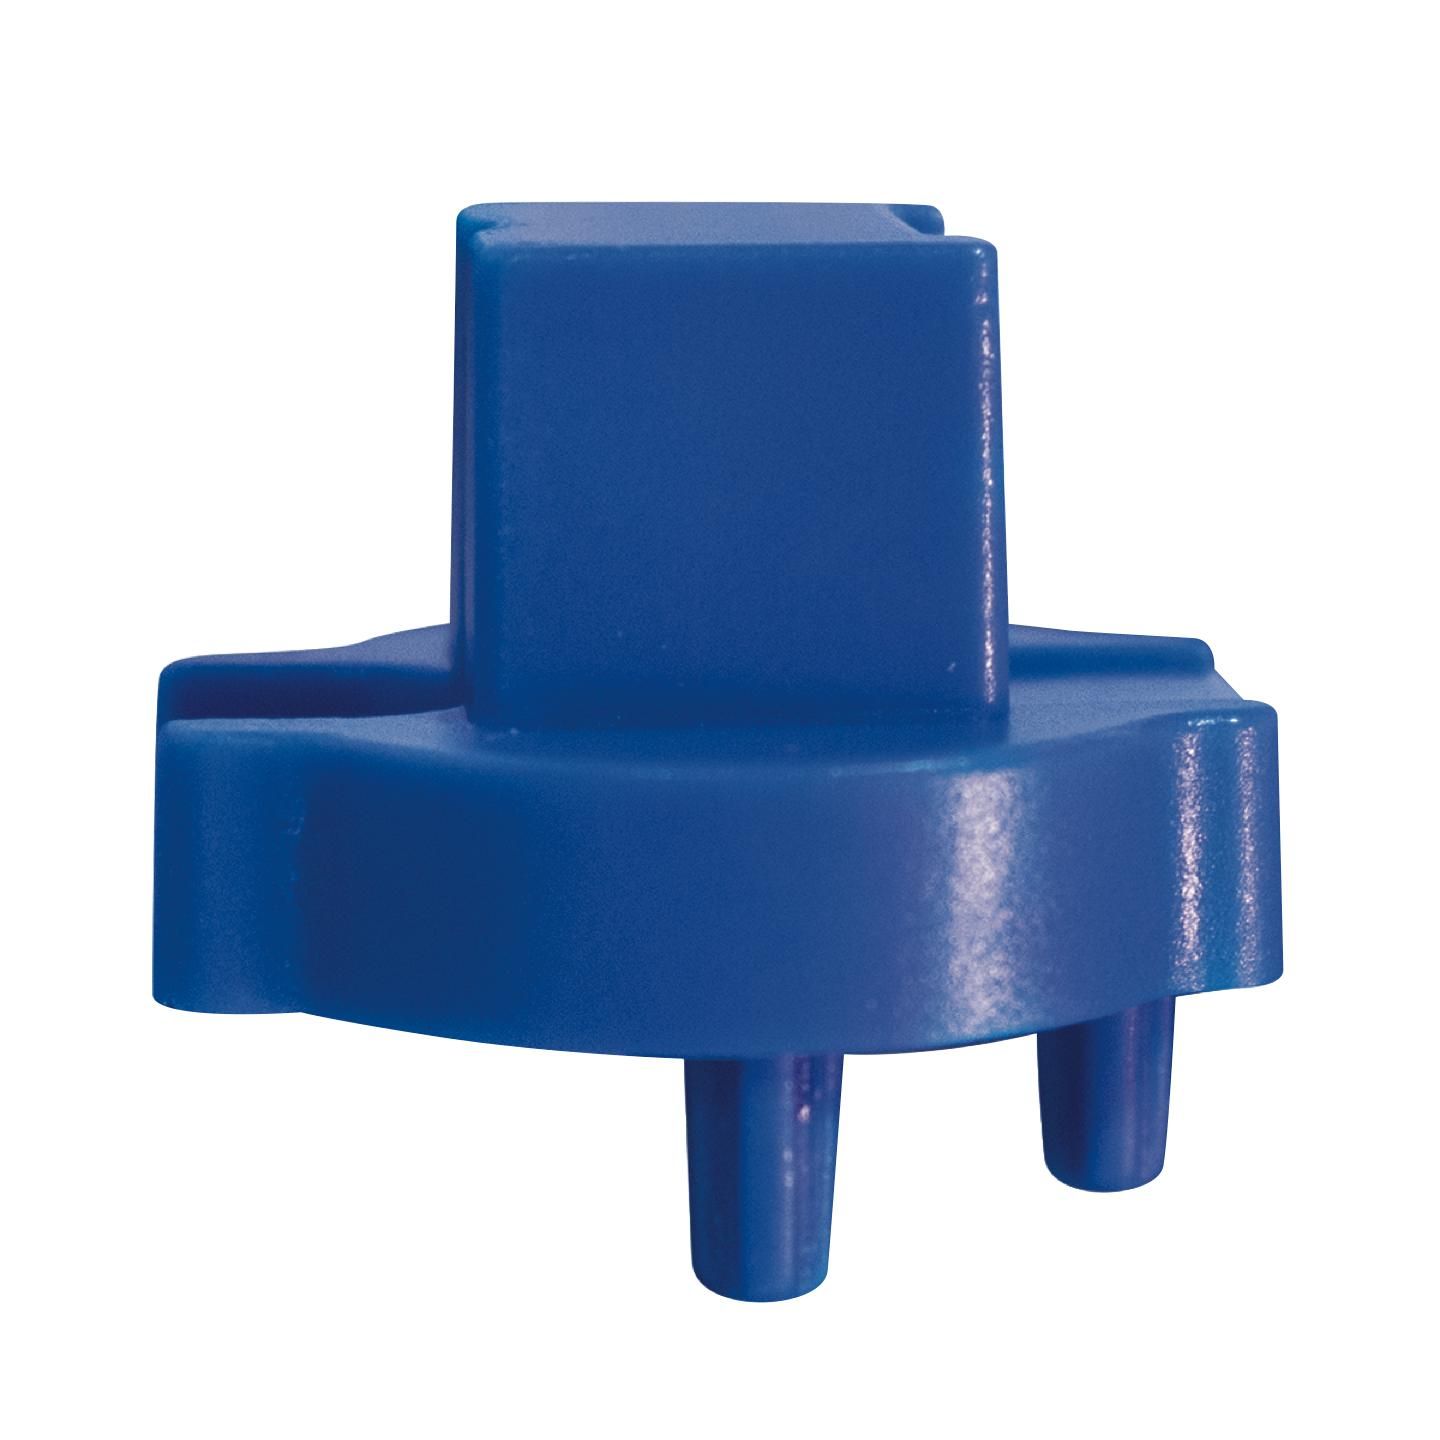 MTS51010 - Toolgrid™ 1/2" Socket Holder, Blue (25-Piece)